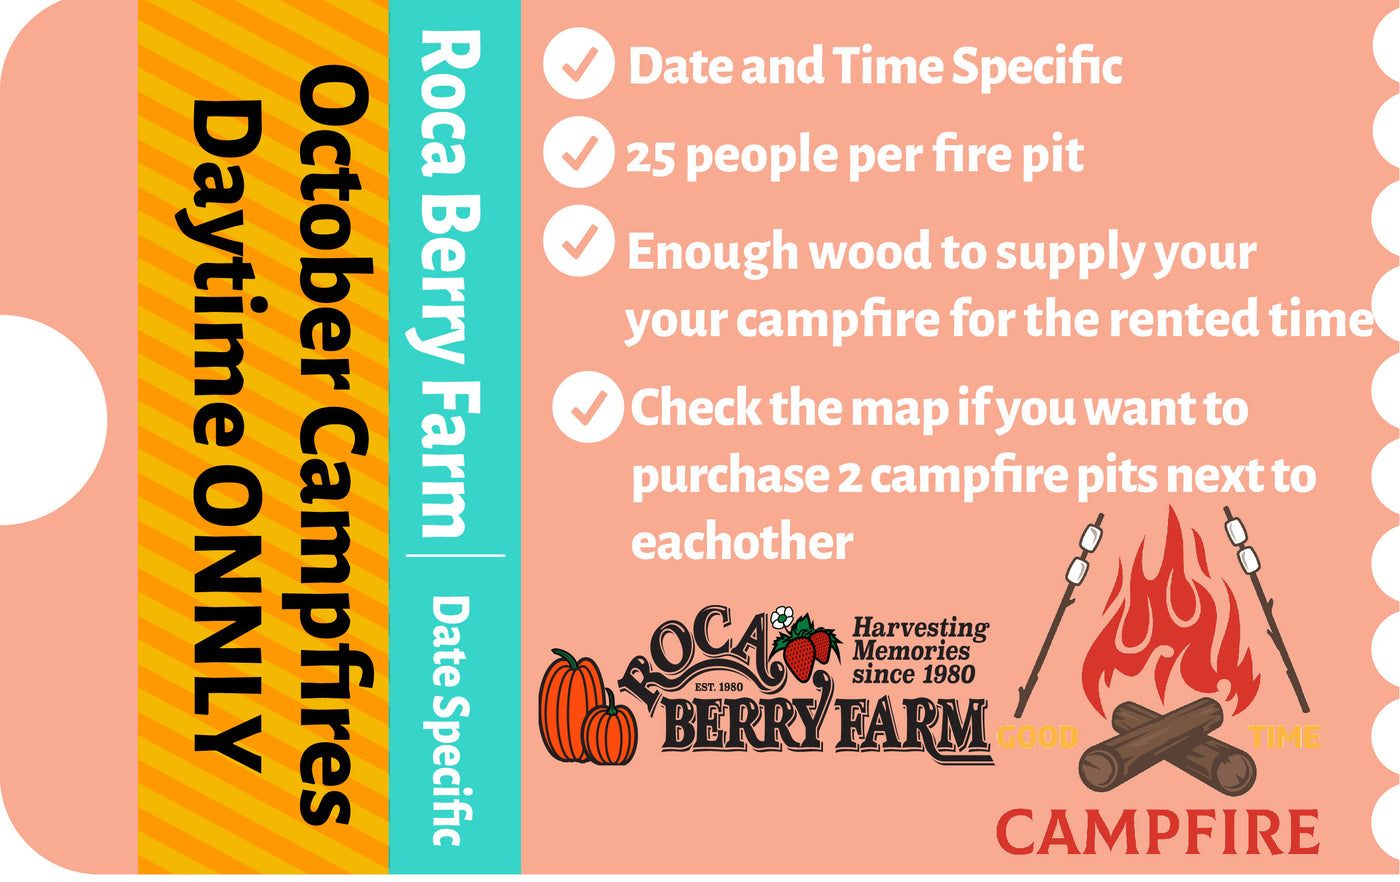 October Daytime Campfires - OCT 14th, 15th